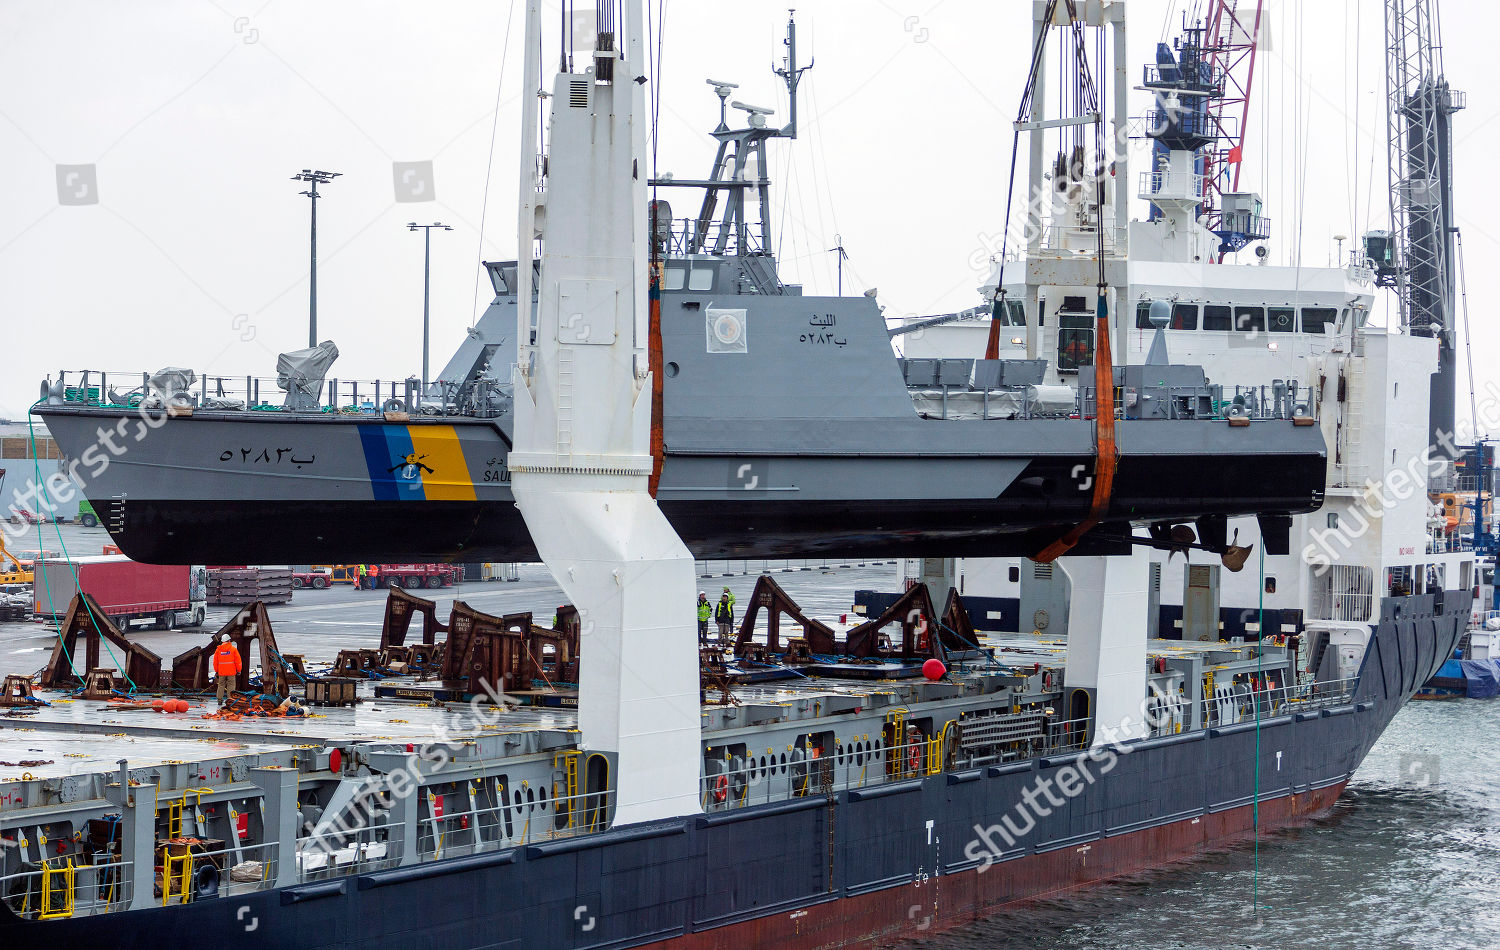 patrol-boats-for-saudi-arabia-mukran-germany-shutterstock-editorial-9642139e.jpg